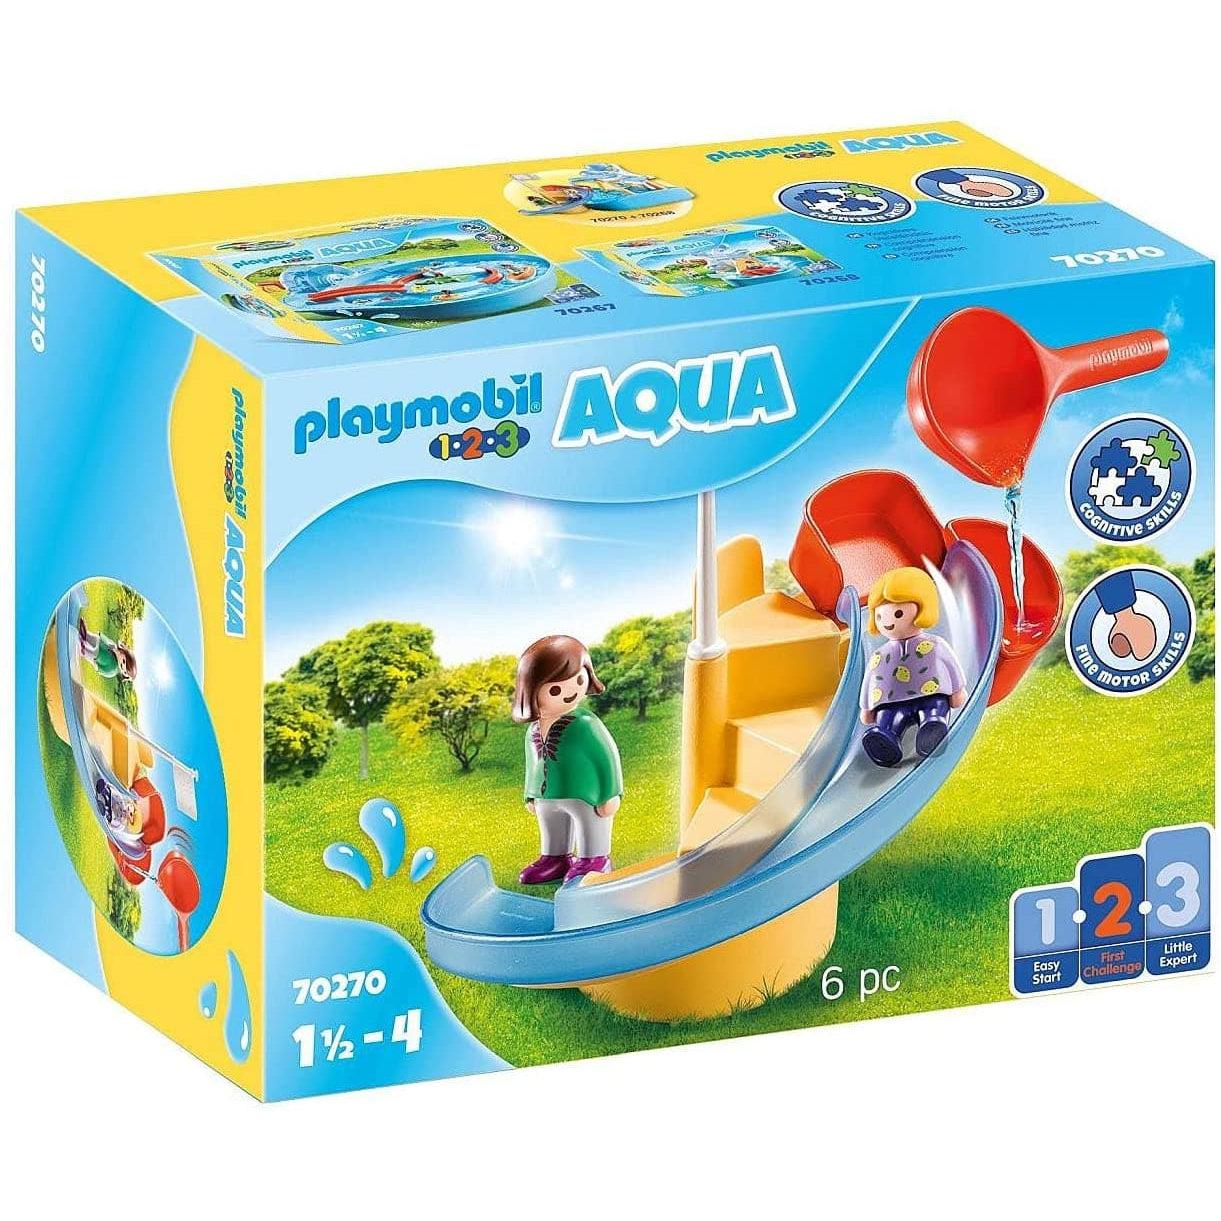 Playmobil-1.2.3. Water Slide-70270-Legacy Toys